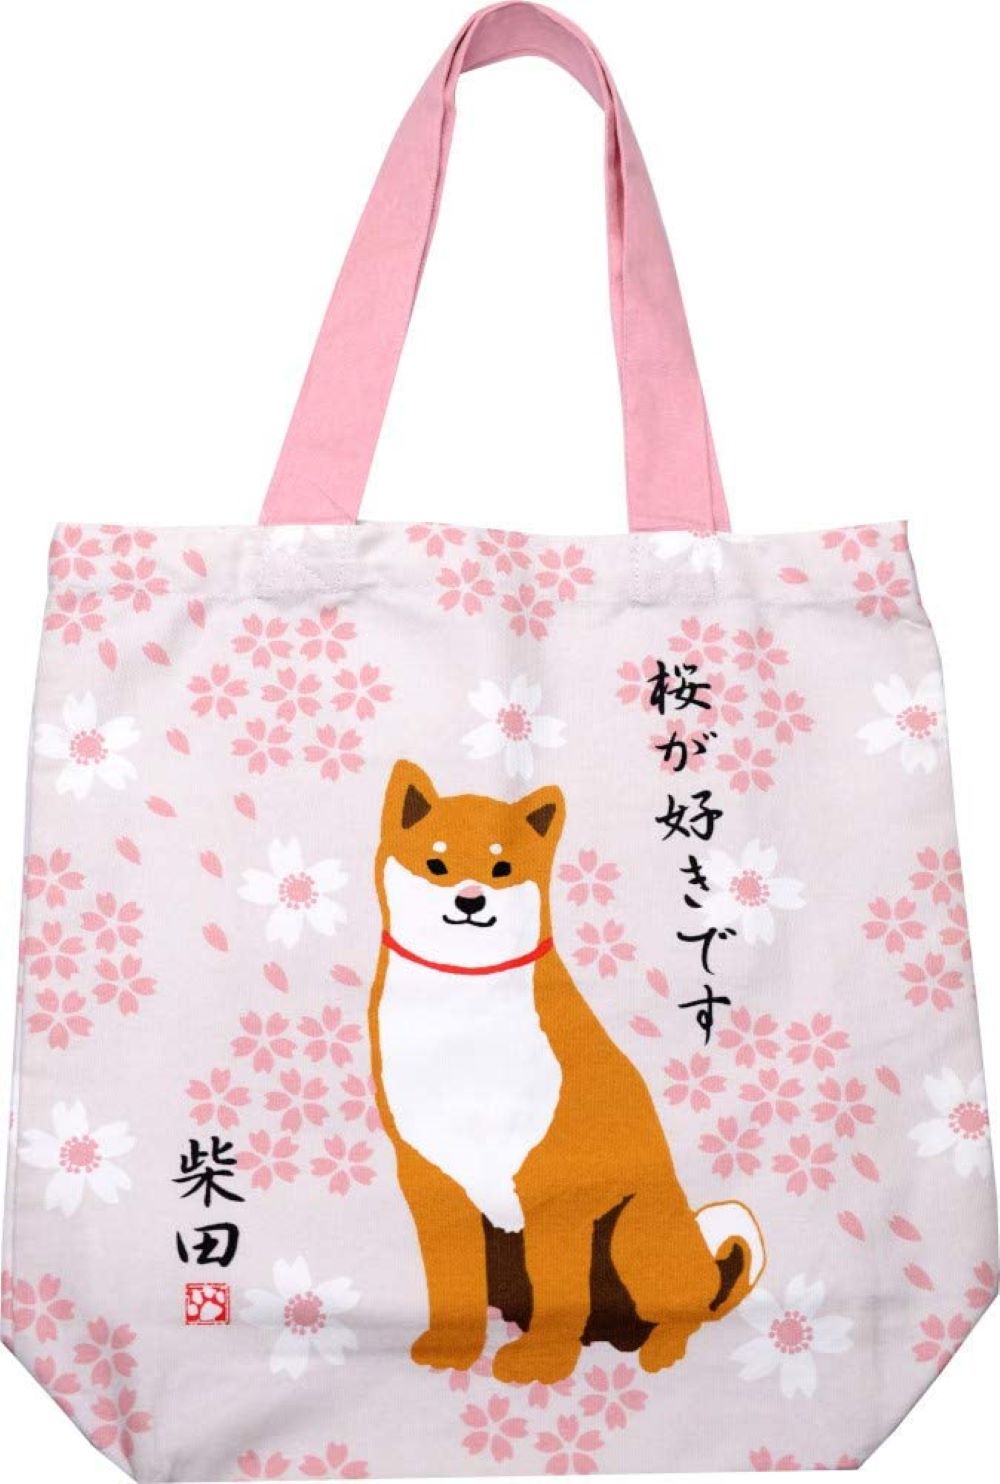 Japanese shoulder bag - Shiba Inu